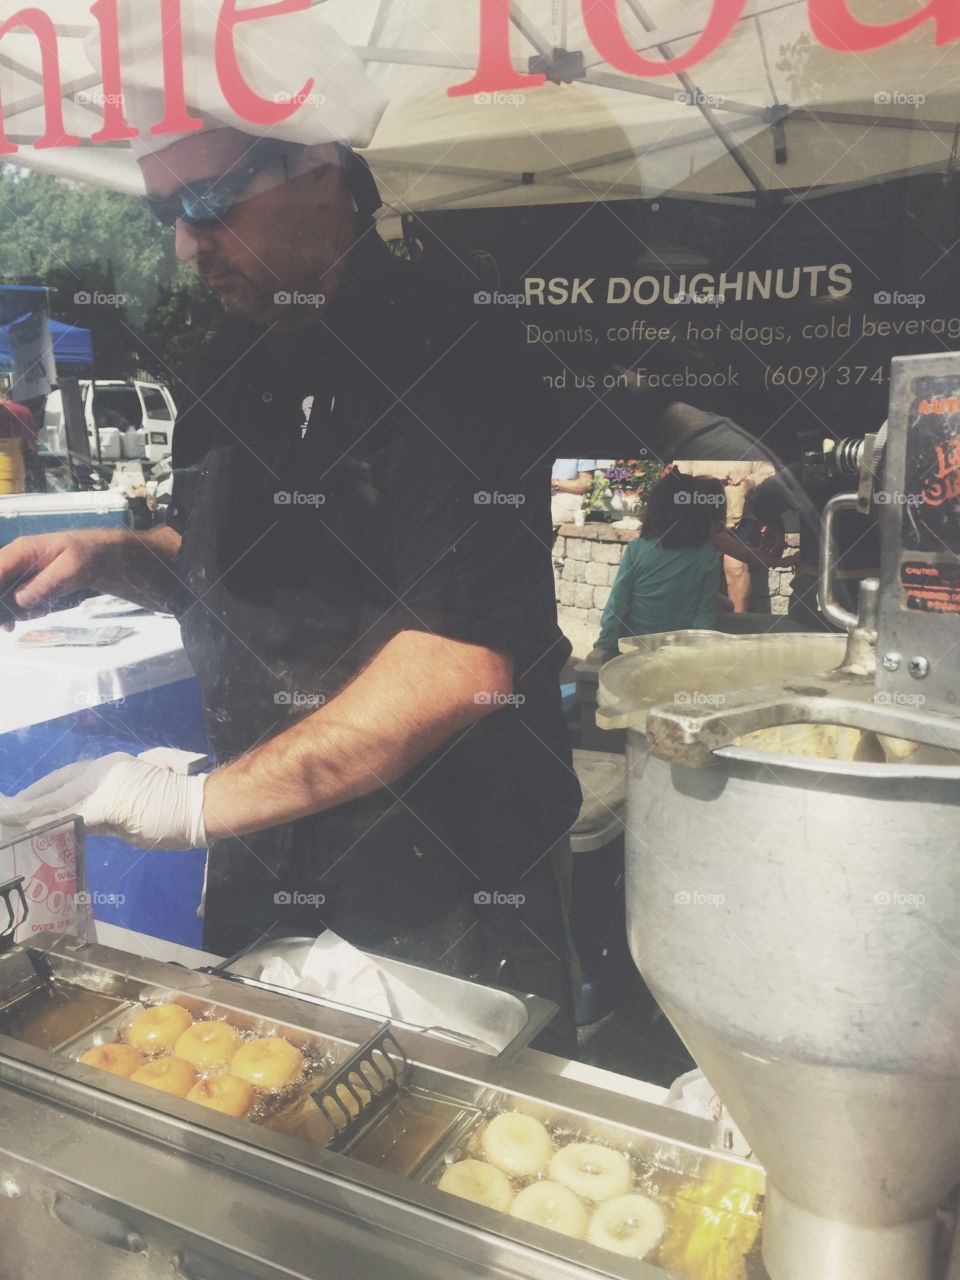 Doughnuts make us nuts . Margate, NJ local market